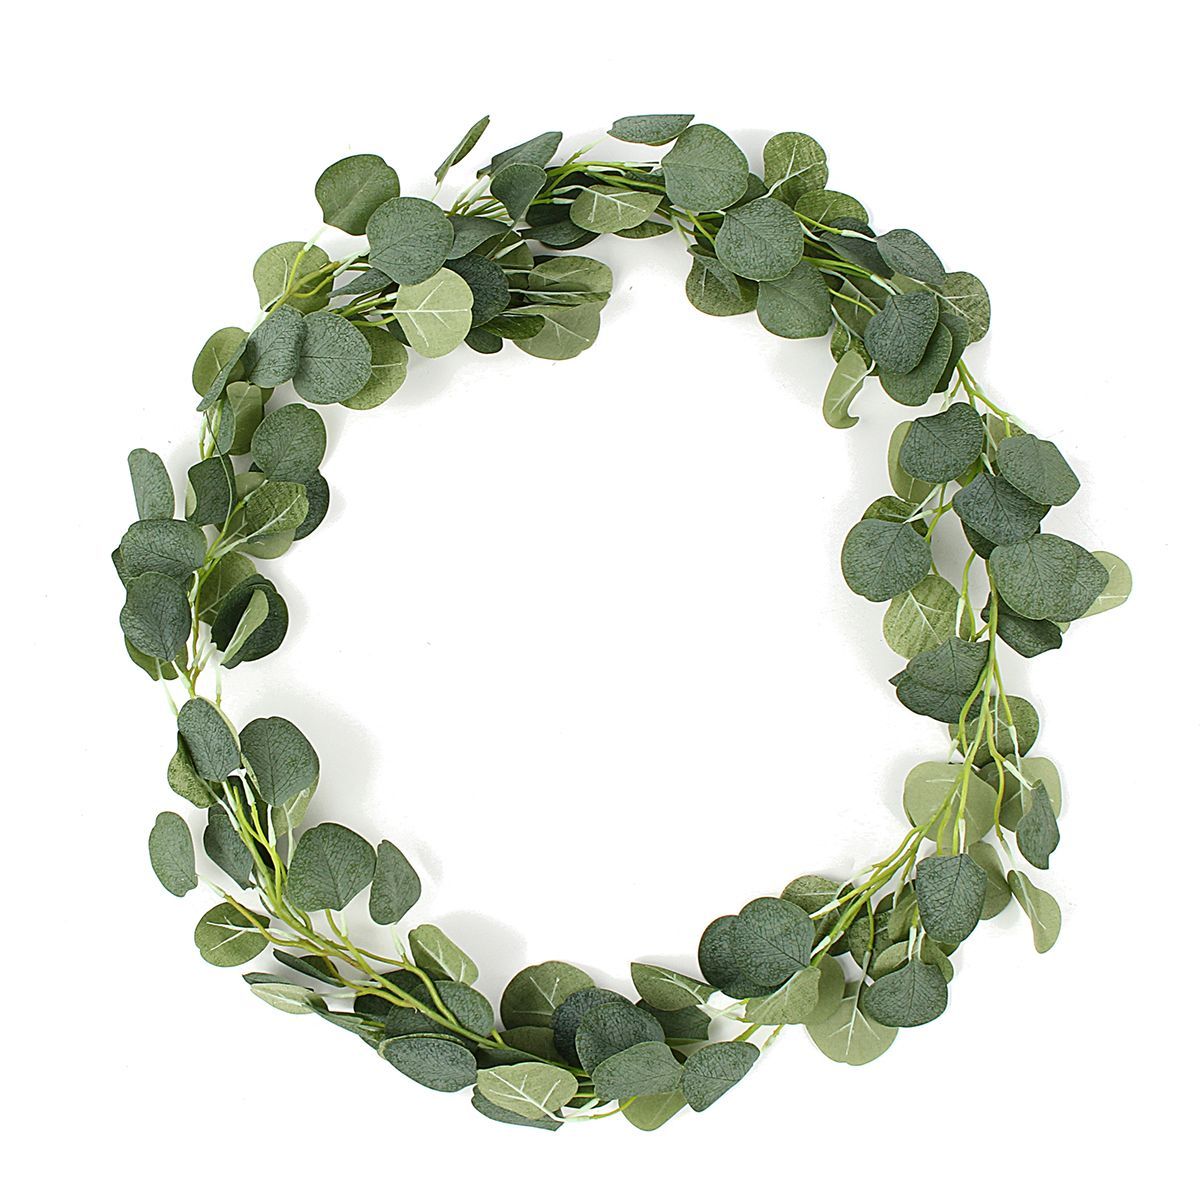 70quot-Artificial-Eucalyptus-Garland-Faux-Silk-Vines-Leave-Leaf-Green-Wedding-Decor-Supplies-1530230